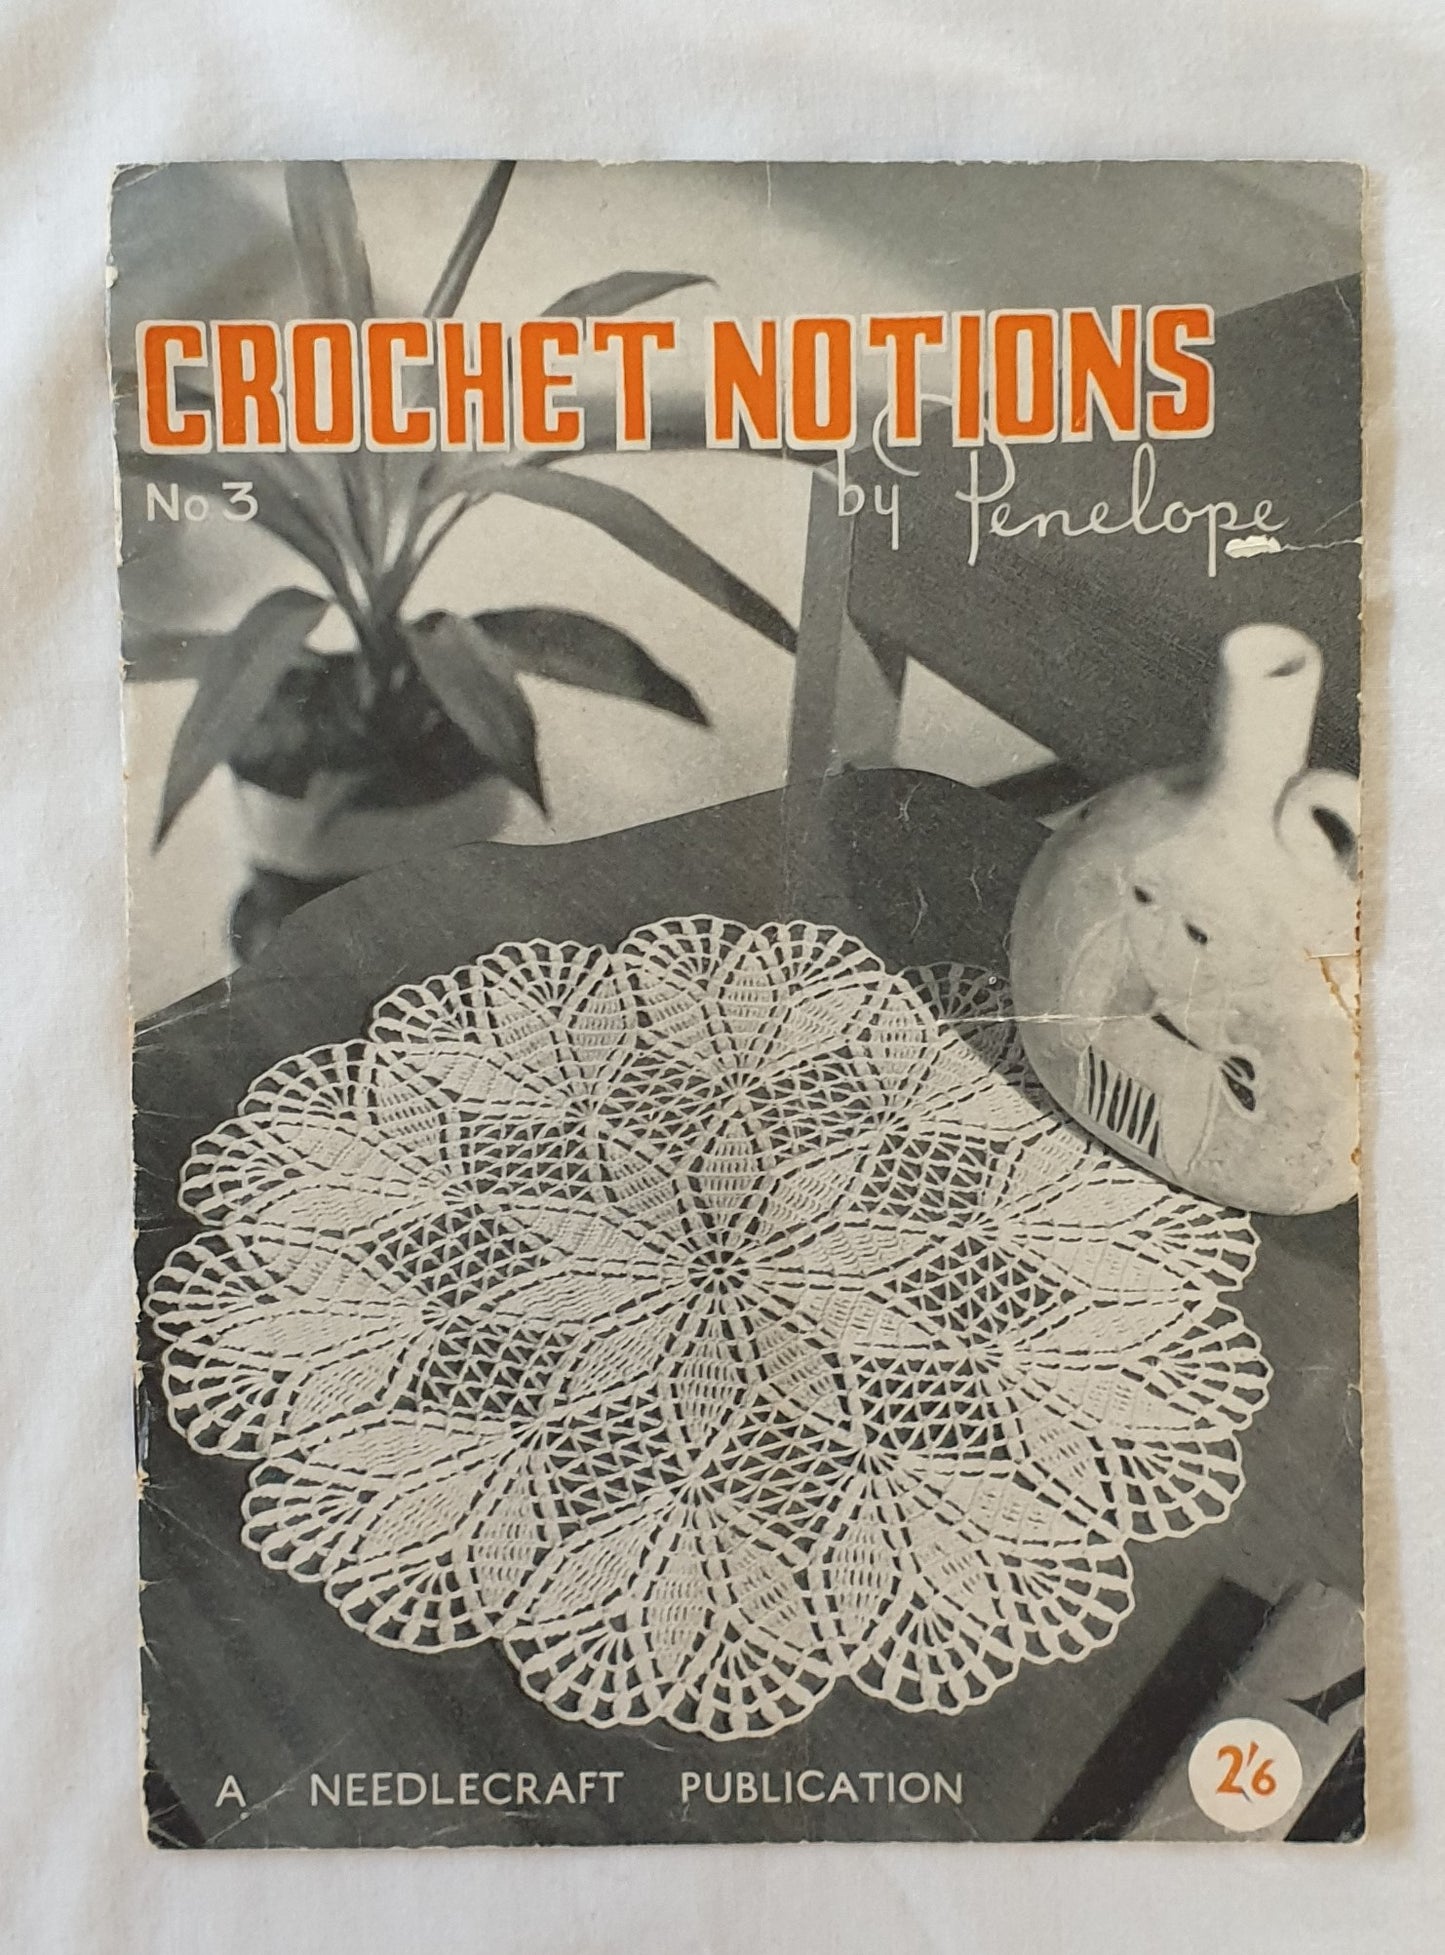 Crochet Notions No 3  A Needlecraft Publication  By Penelope